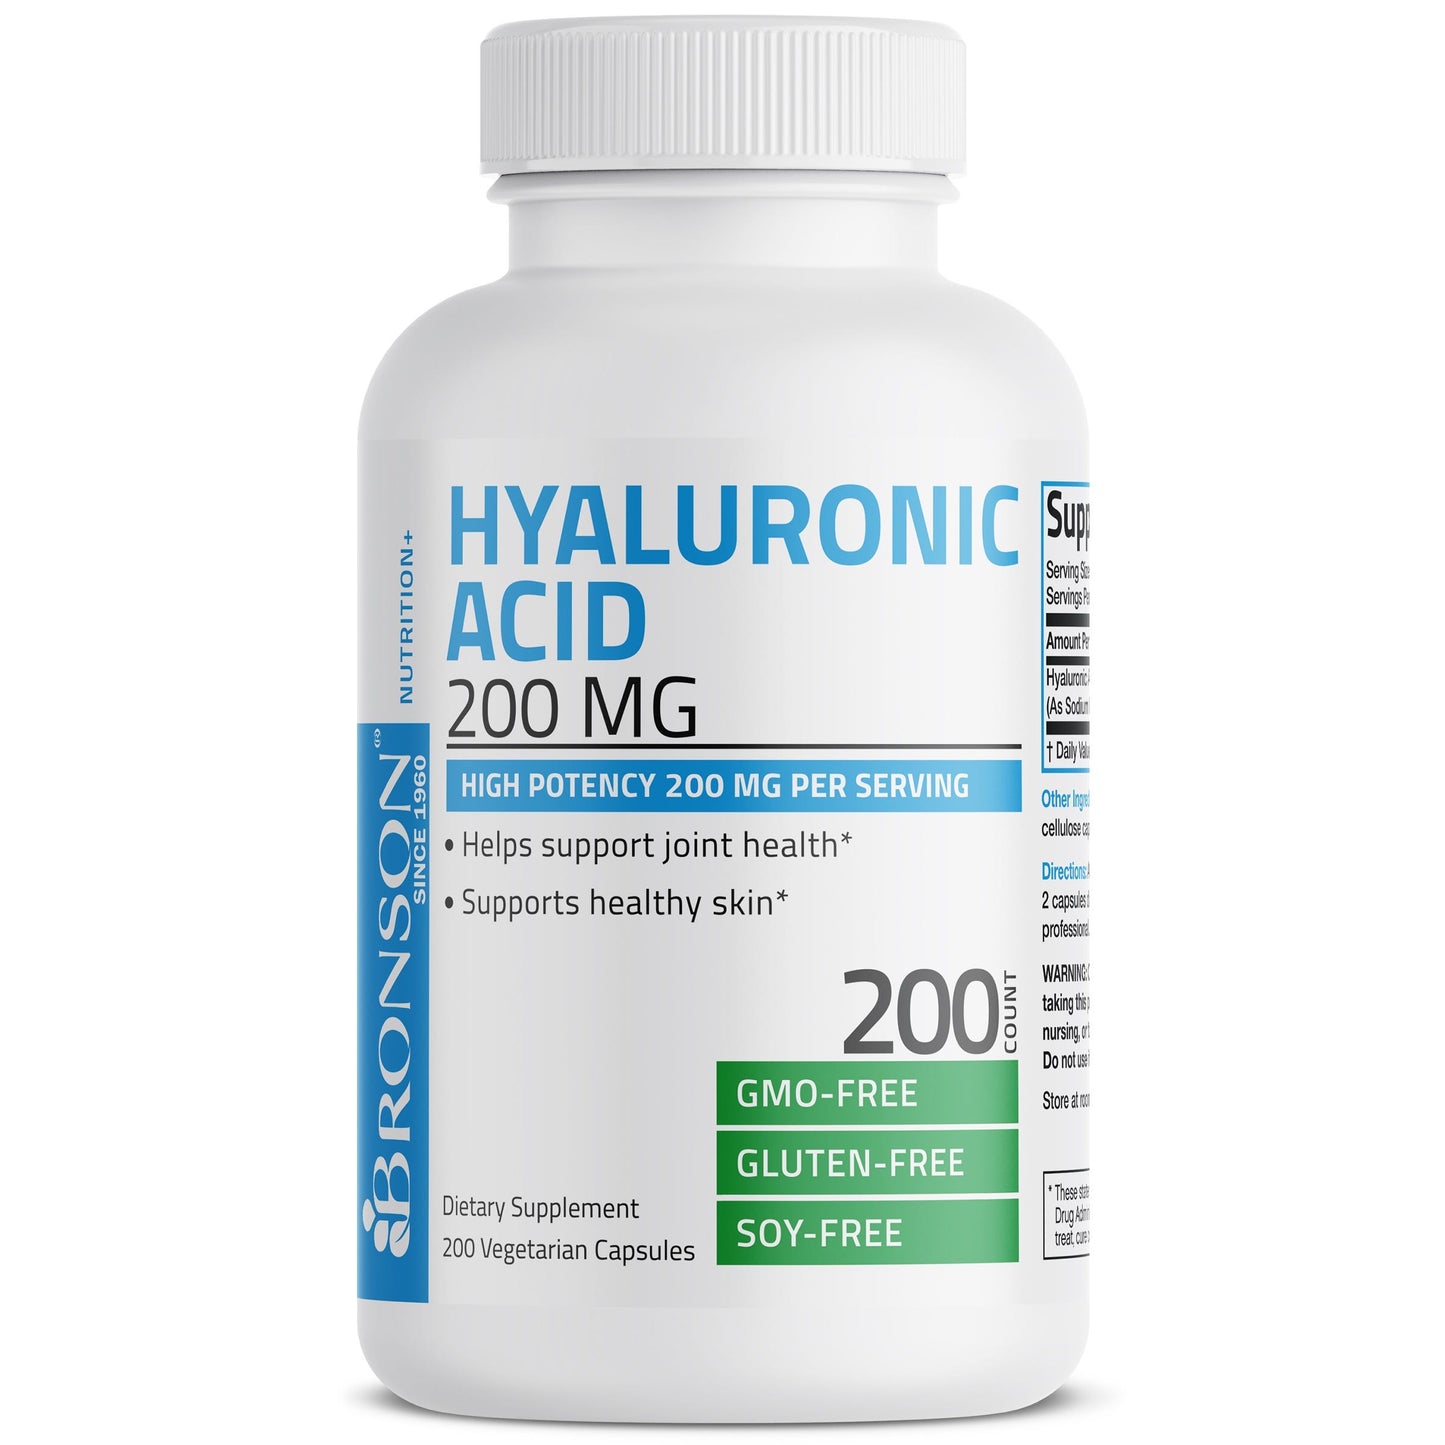 Hyaluronic Acid 200 MG, 200 Vegetarian Capsules